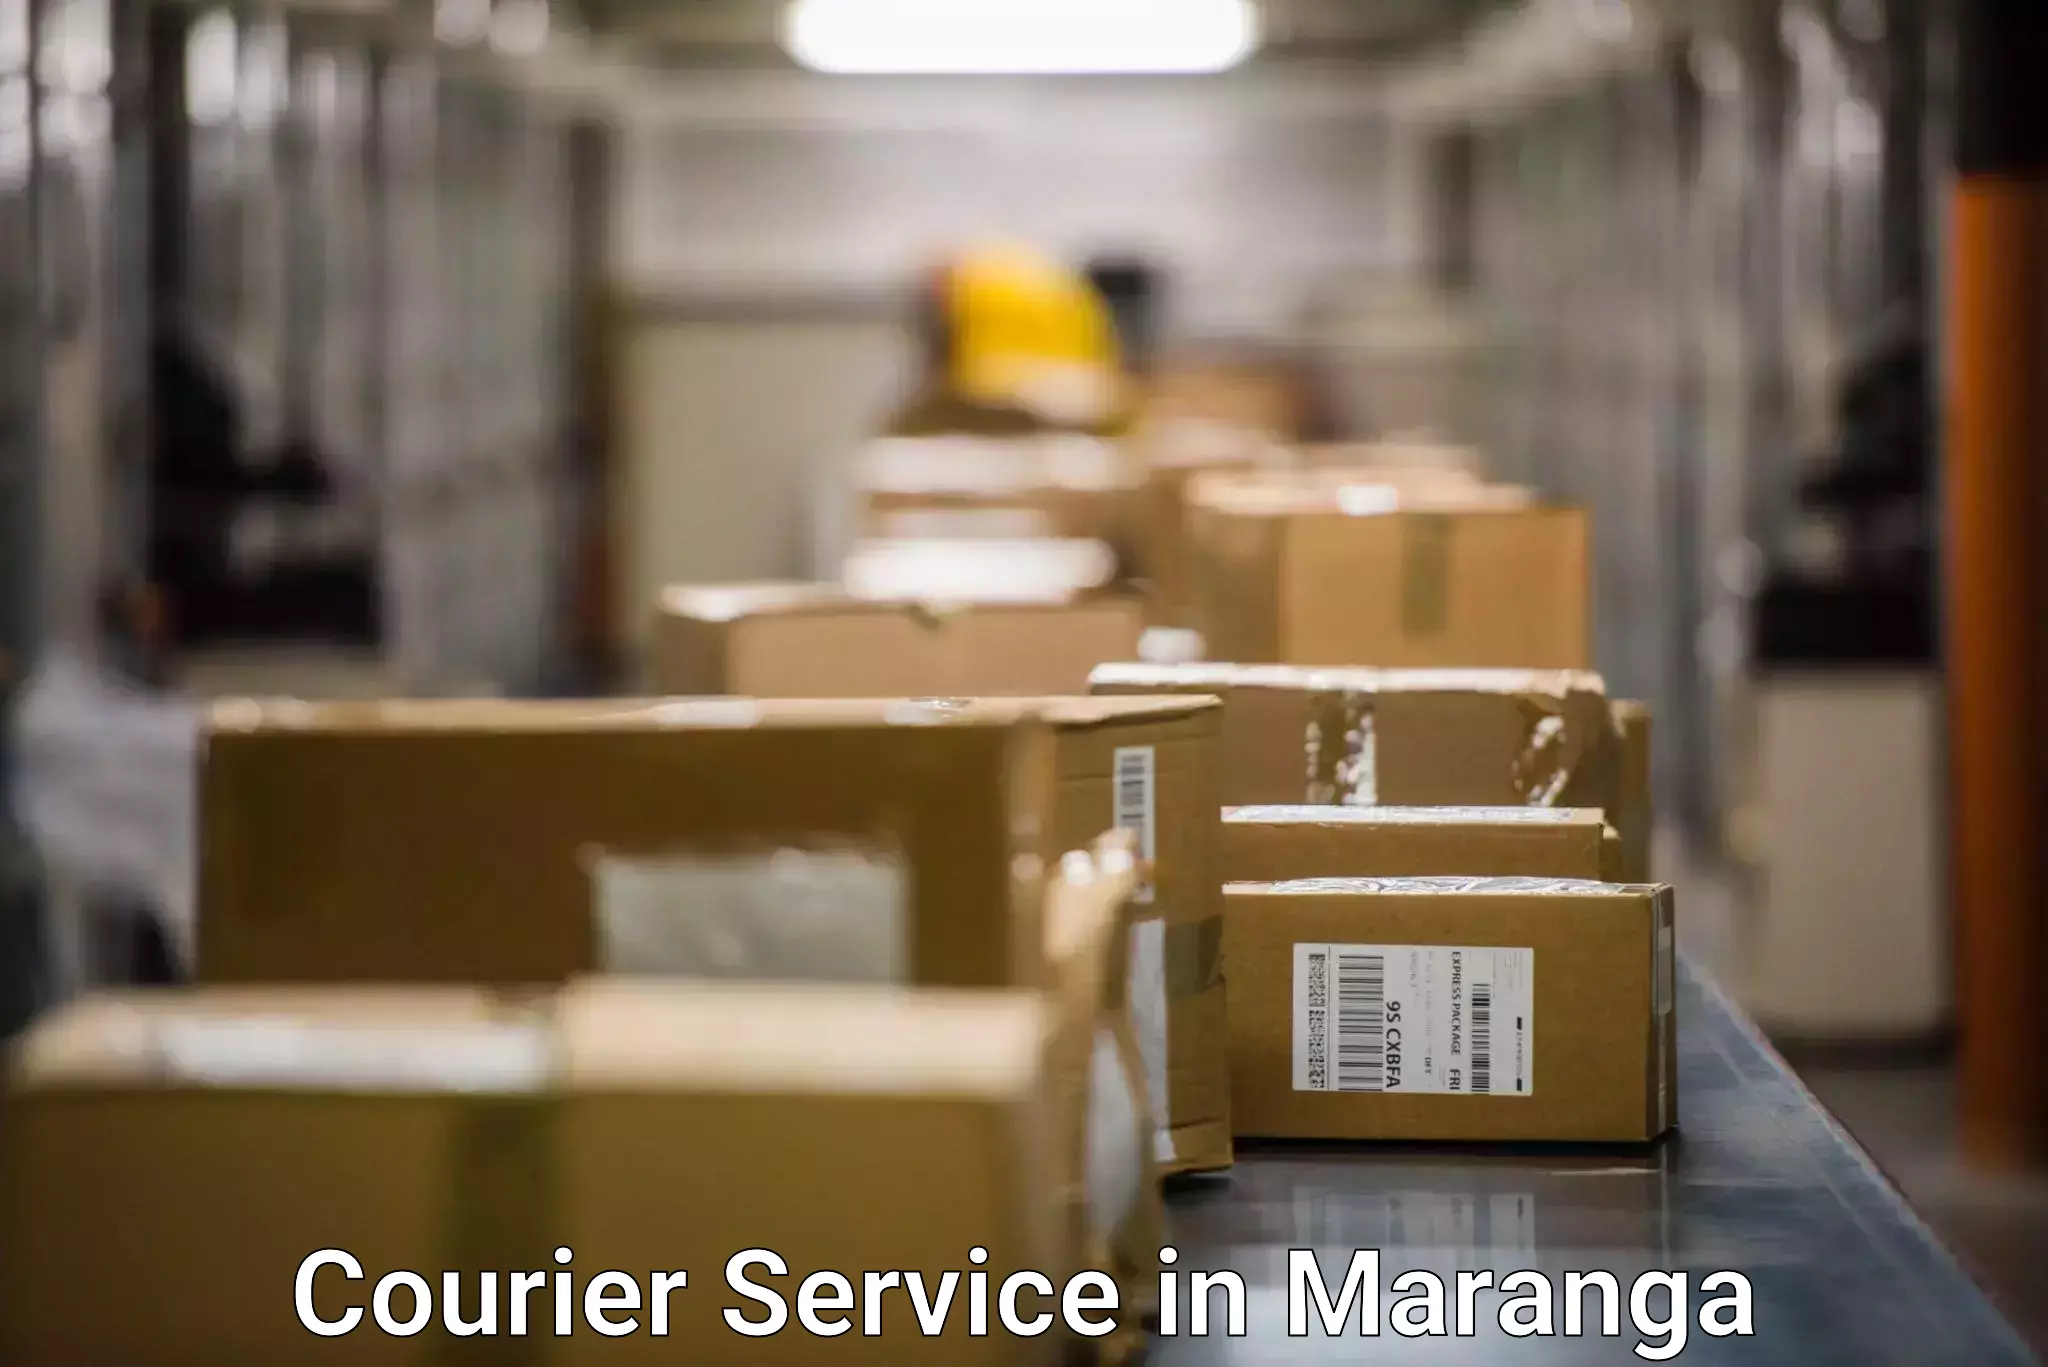 Premium delivery services in Maranga